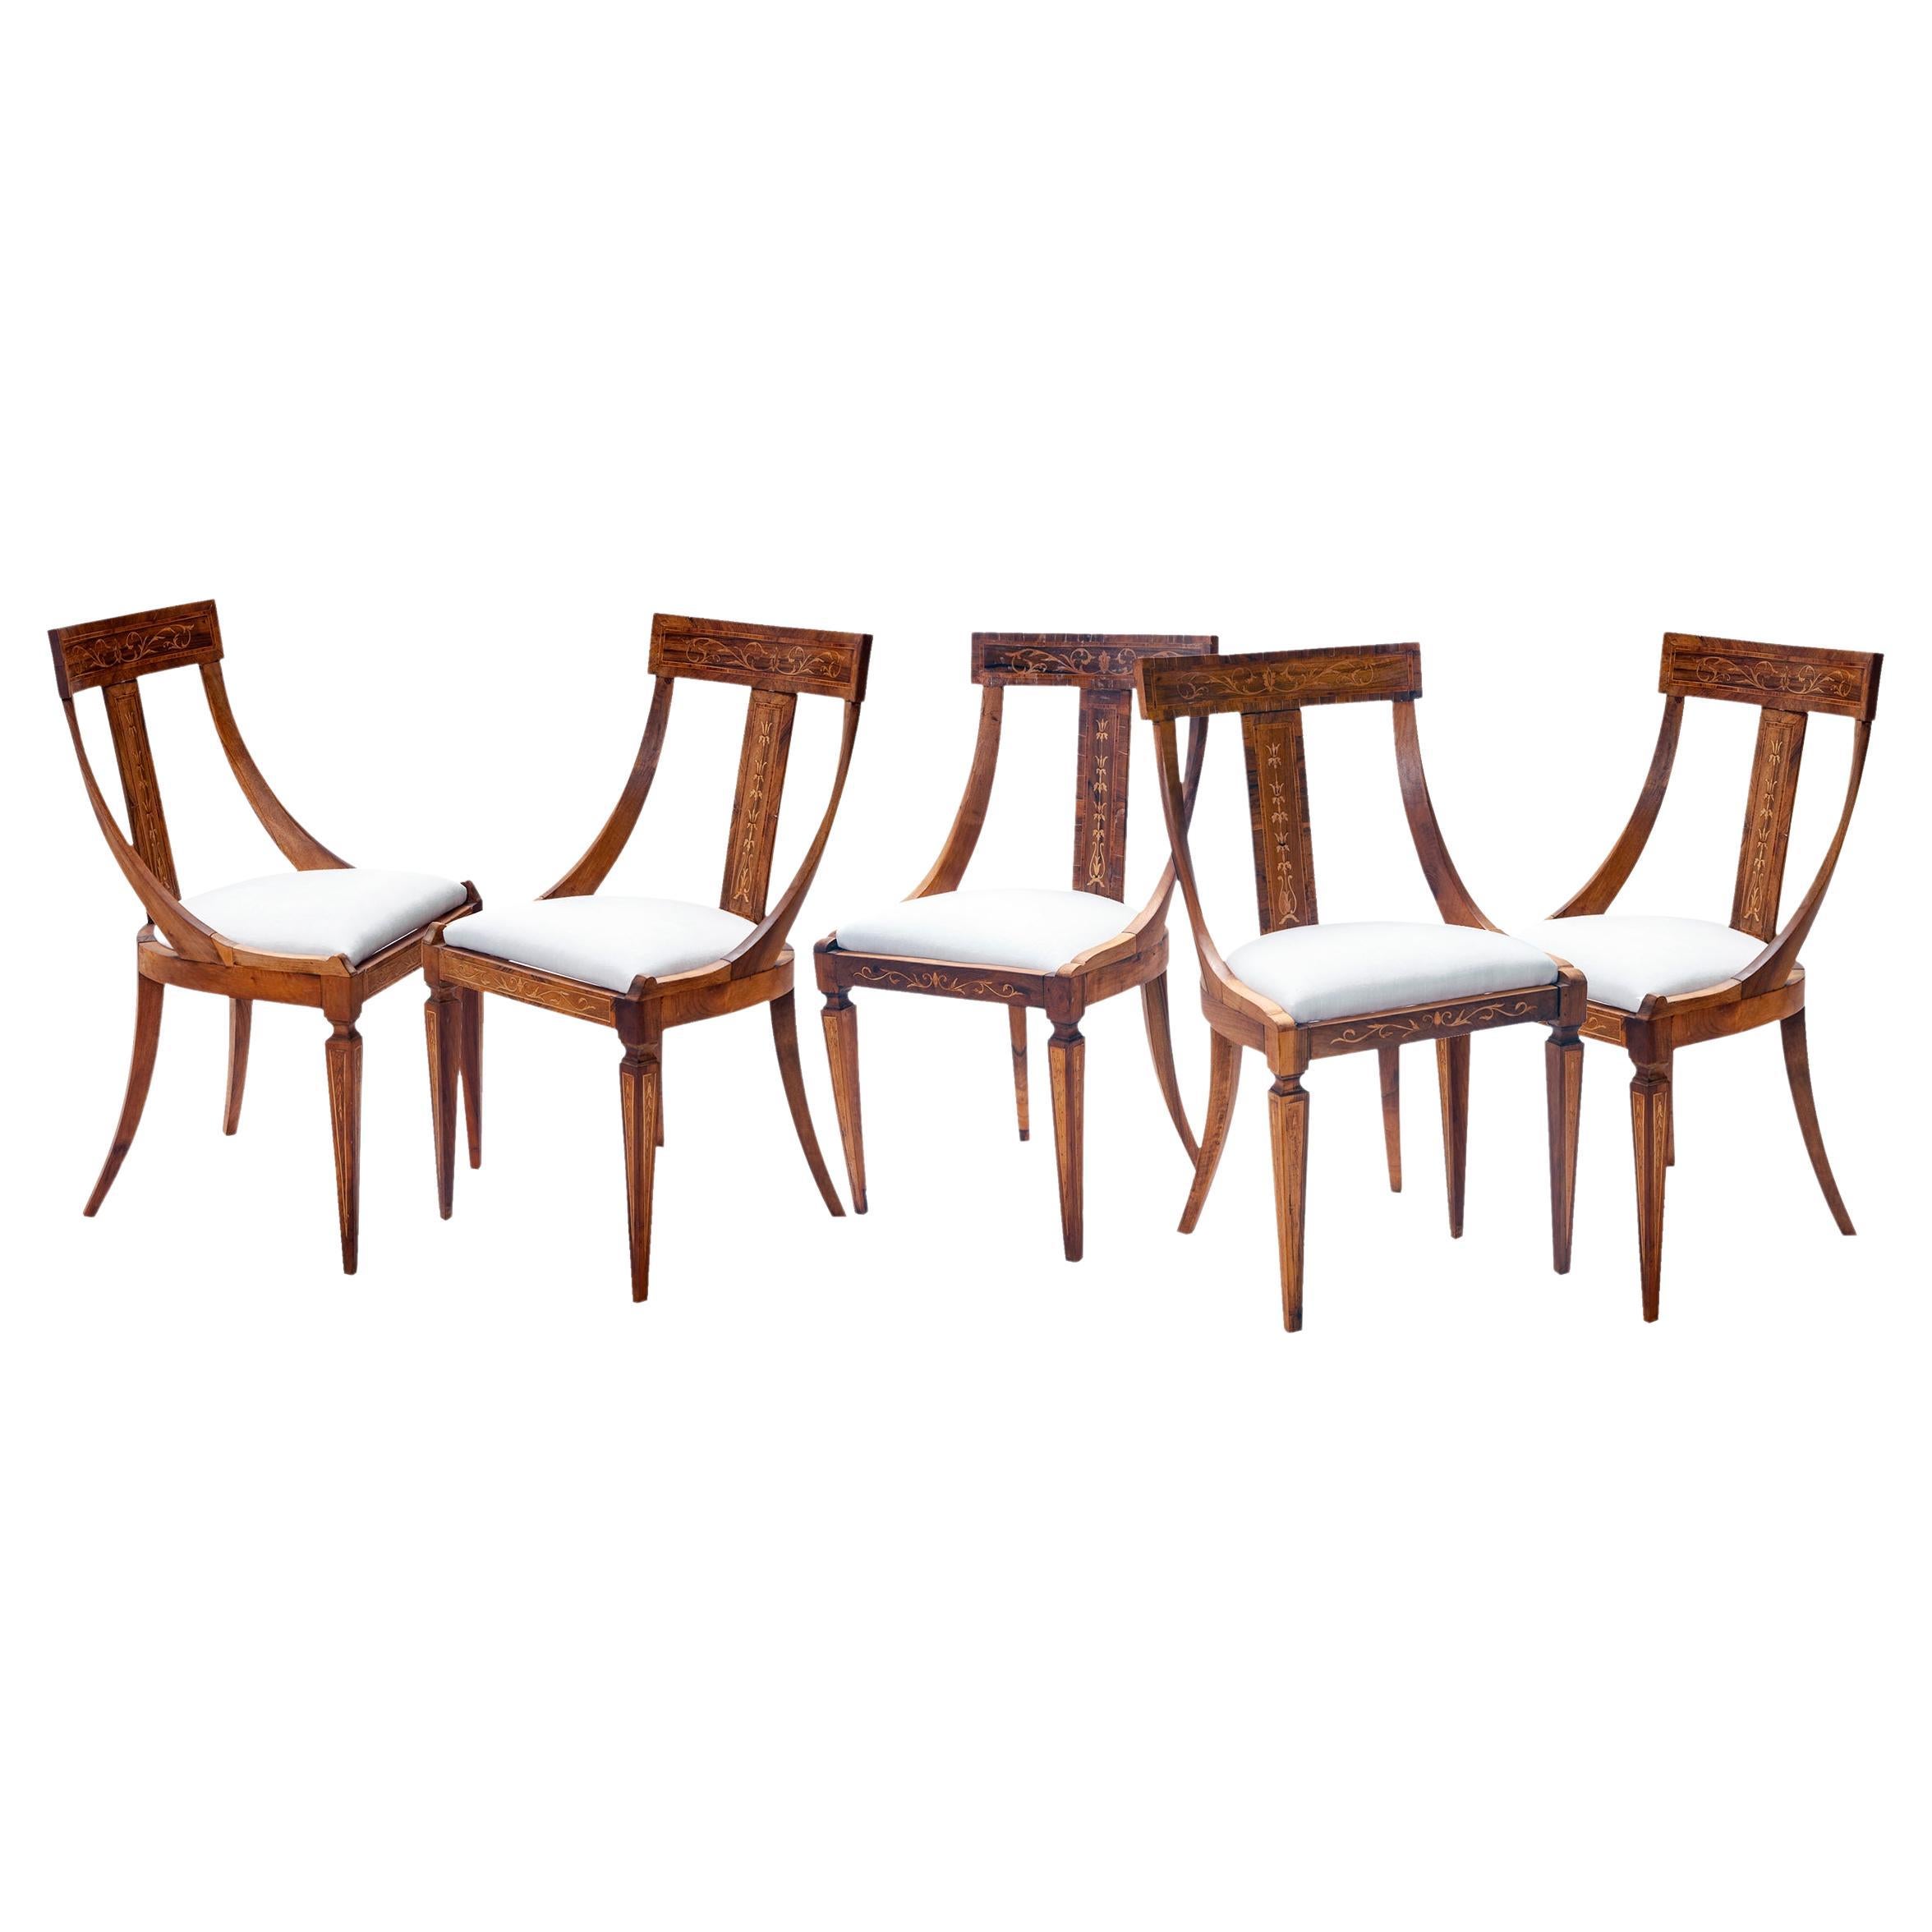 19th C European Biedermeier Inlaid Dining Chairs / Linen Seats Set of 5